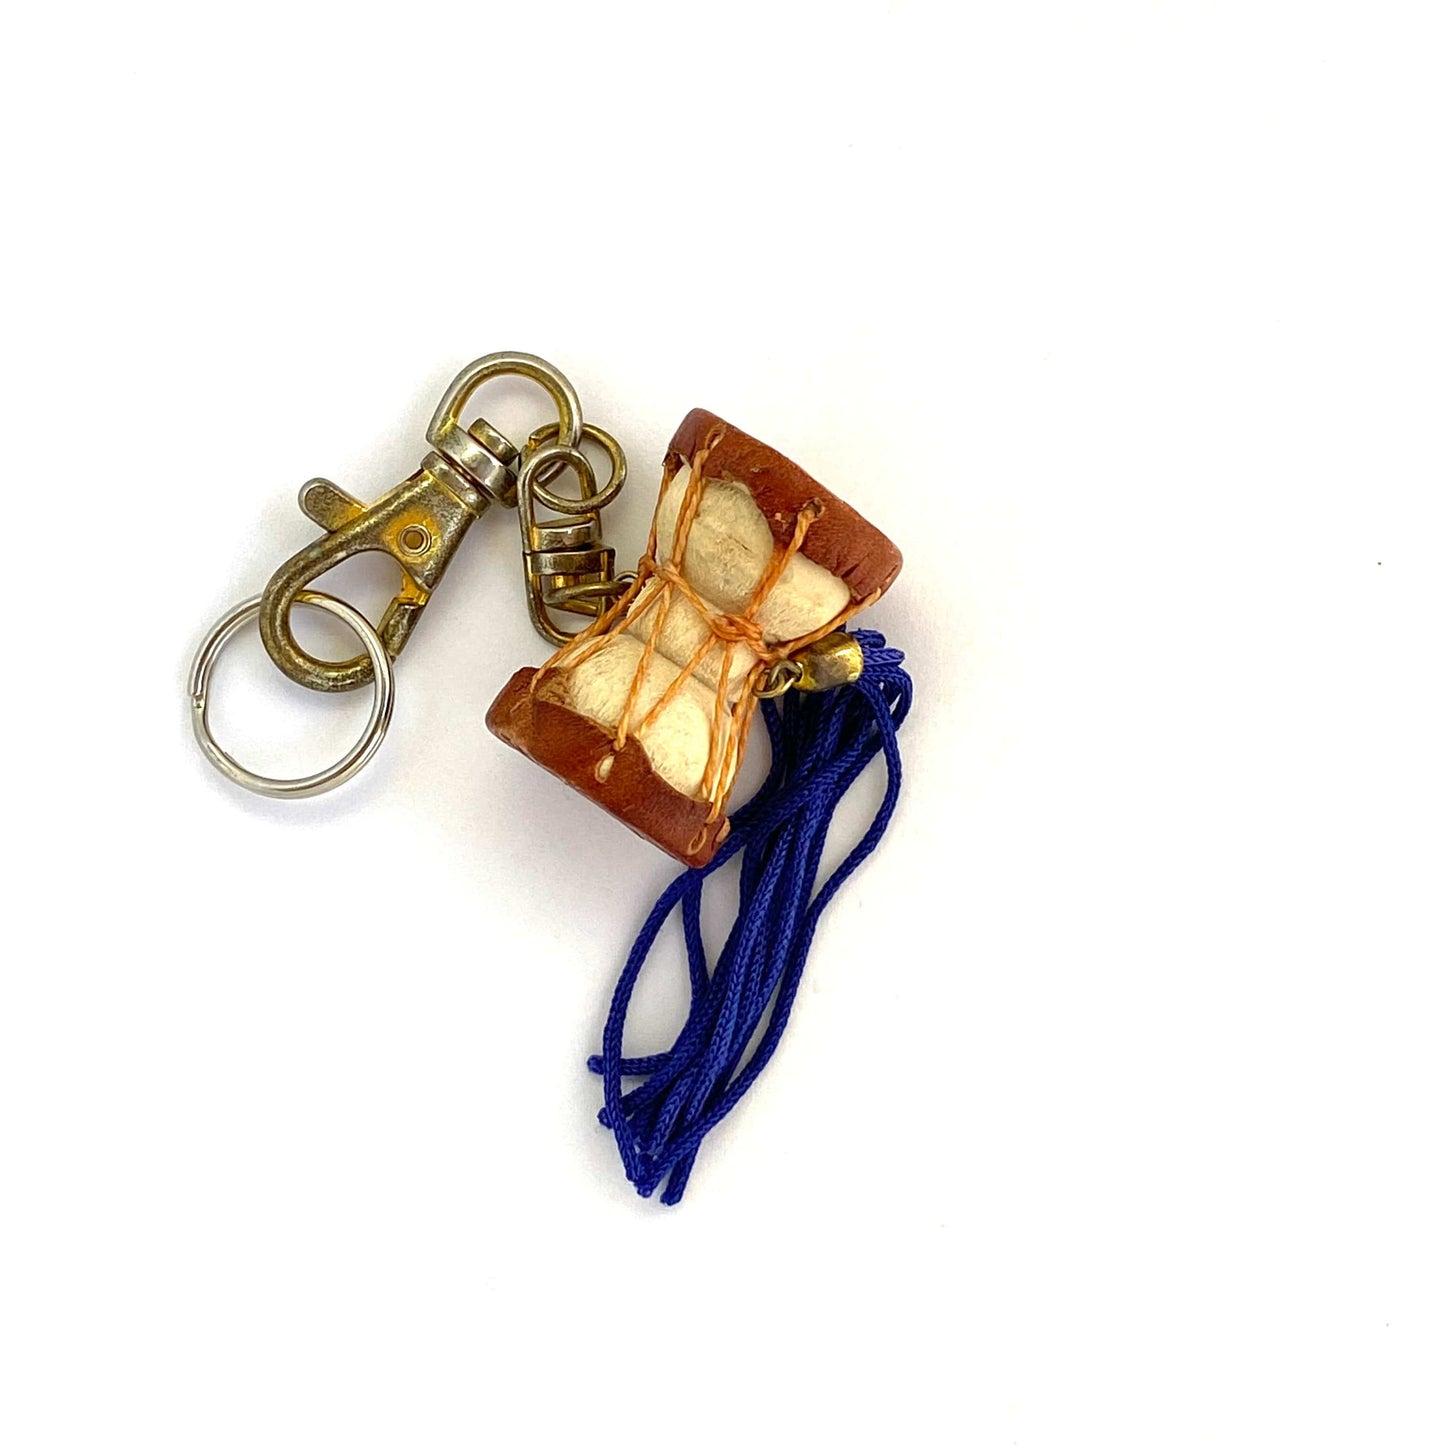 Vintage Korea Drum Tassle Travel Souvenir Solid Brass Keychain Key Ring Charm